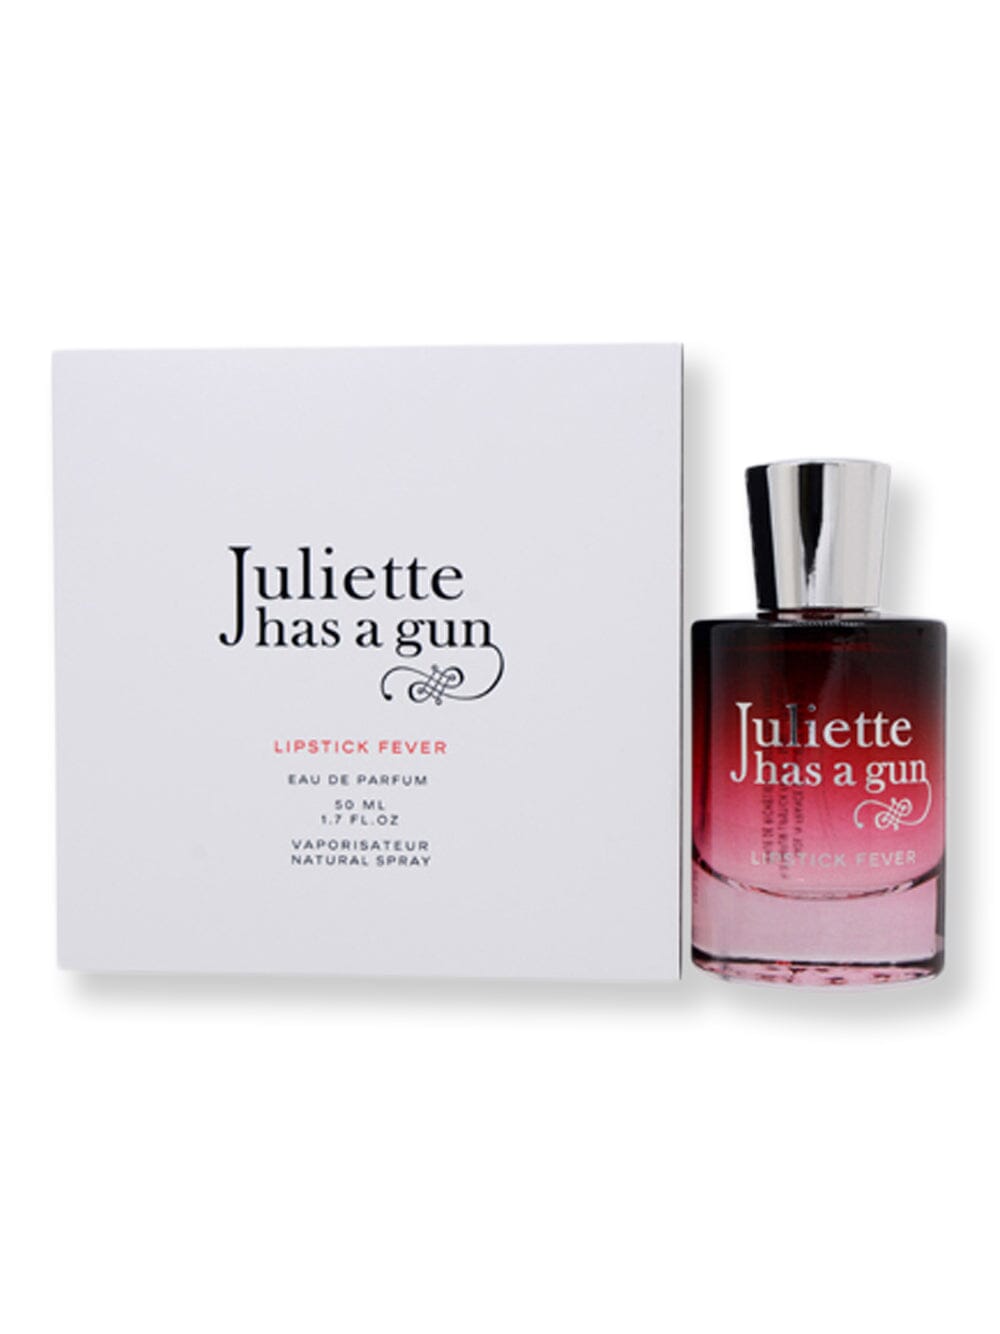 Juliette has a Gun Juliette has a Gun Lipstick Fever Has A Gun EDP Spray 1.7 oz50 ml Perfume 